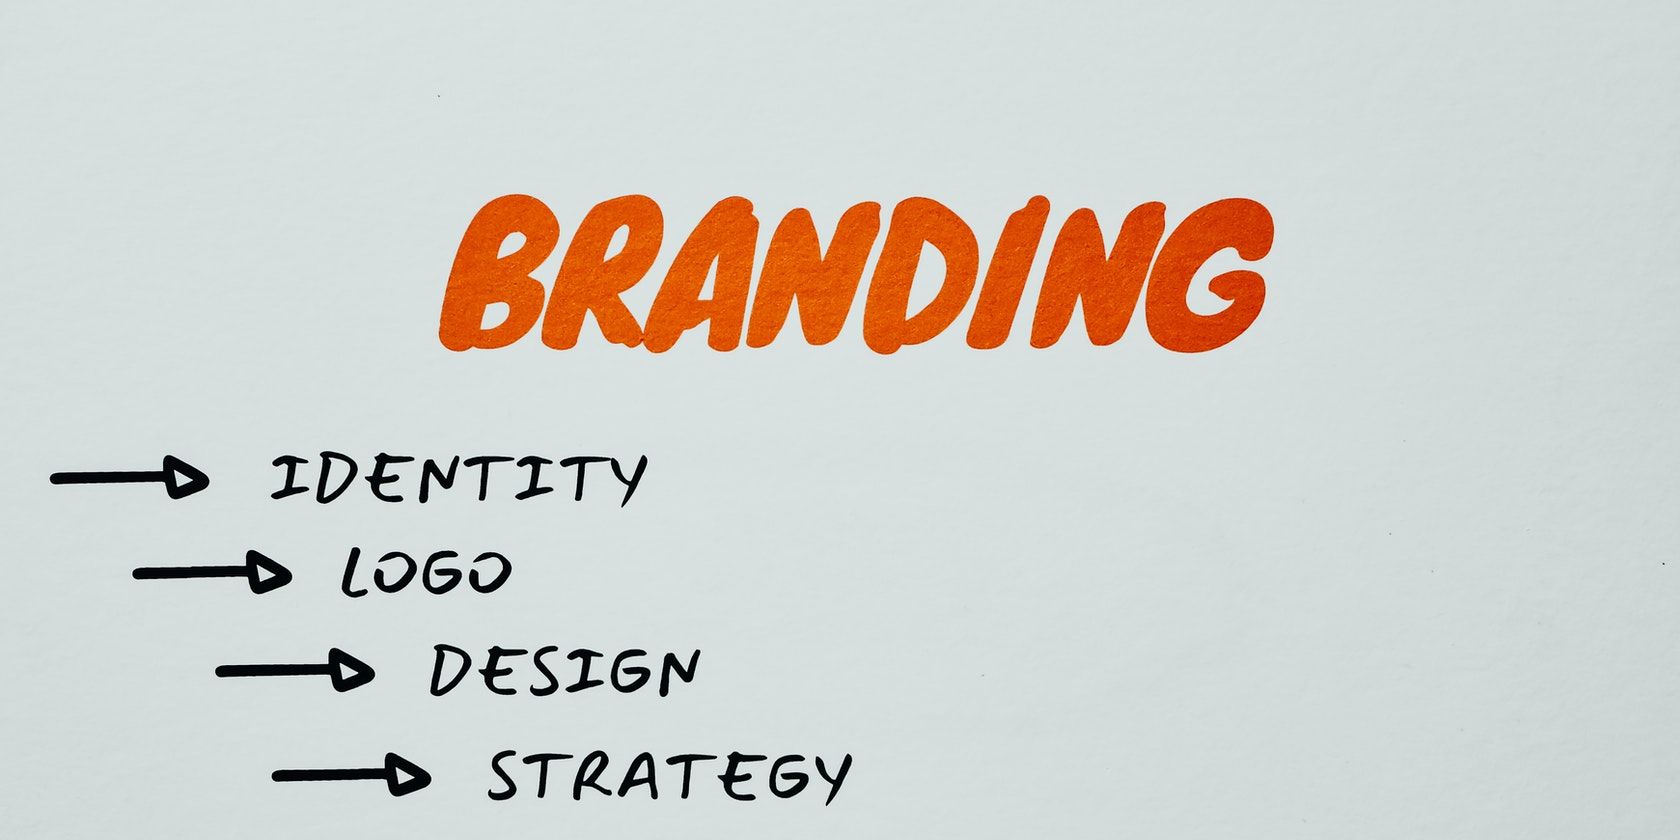 Branding written in text with bullet points underneath describing the key elements of branding